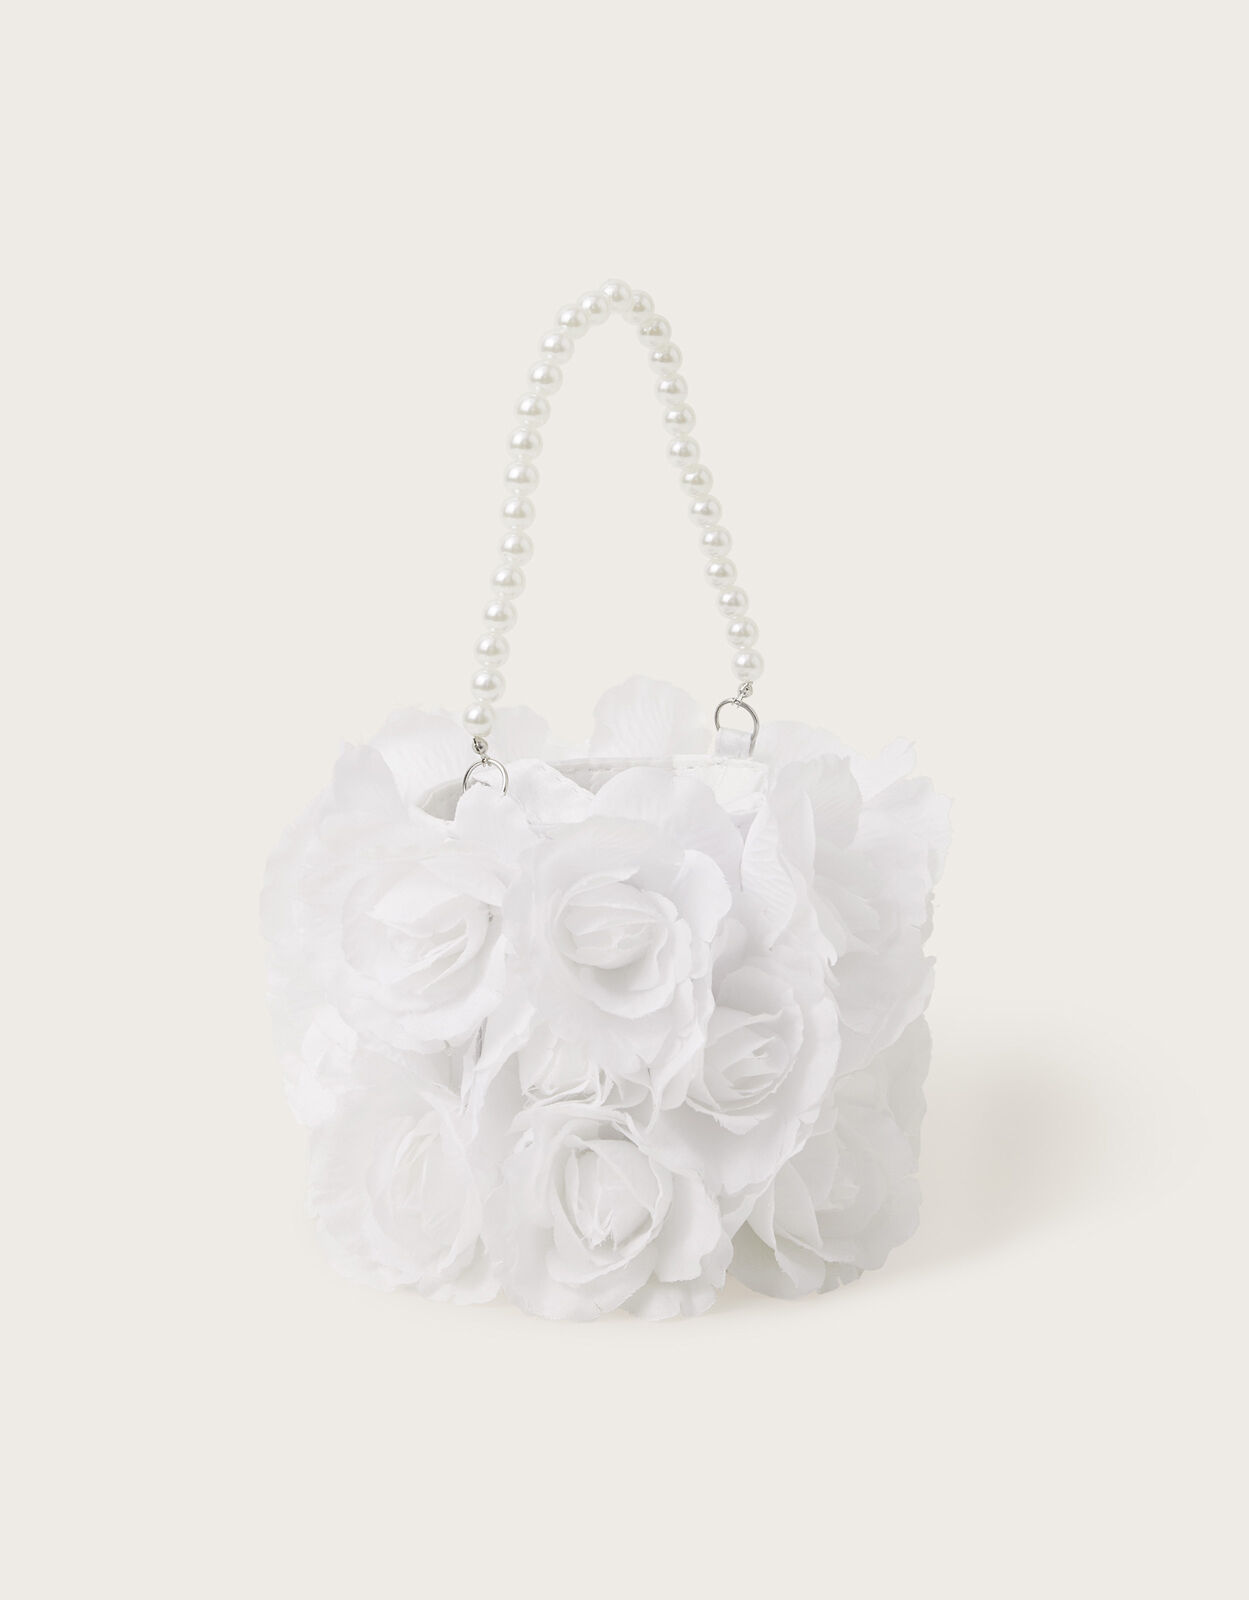 Rosetti - The perfect bag for an afternoon stroll👏 Available now on  Kohls.com #rosetti #satchel #handbag #purse #grey #flowers #tassel #simple  #elegant | Facebook